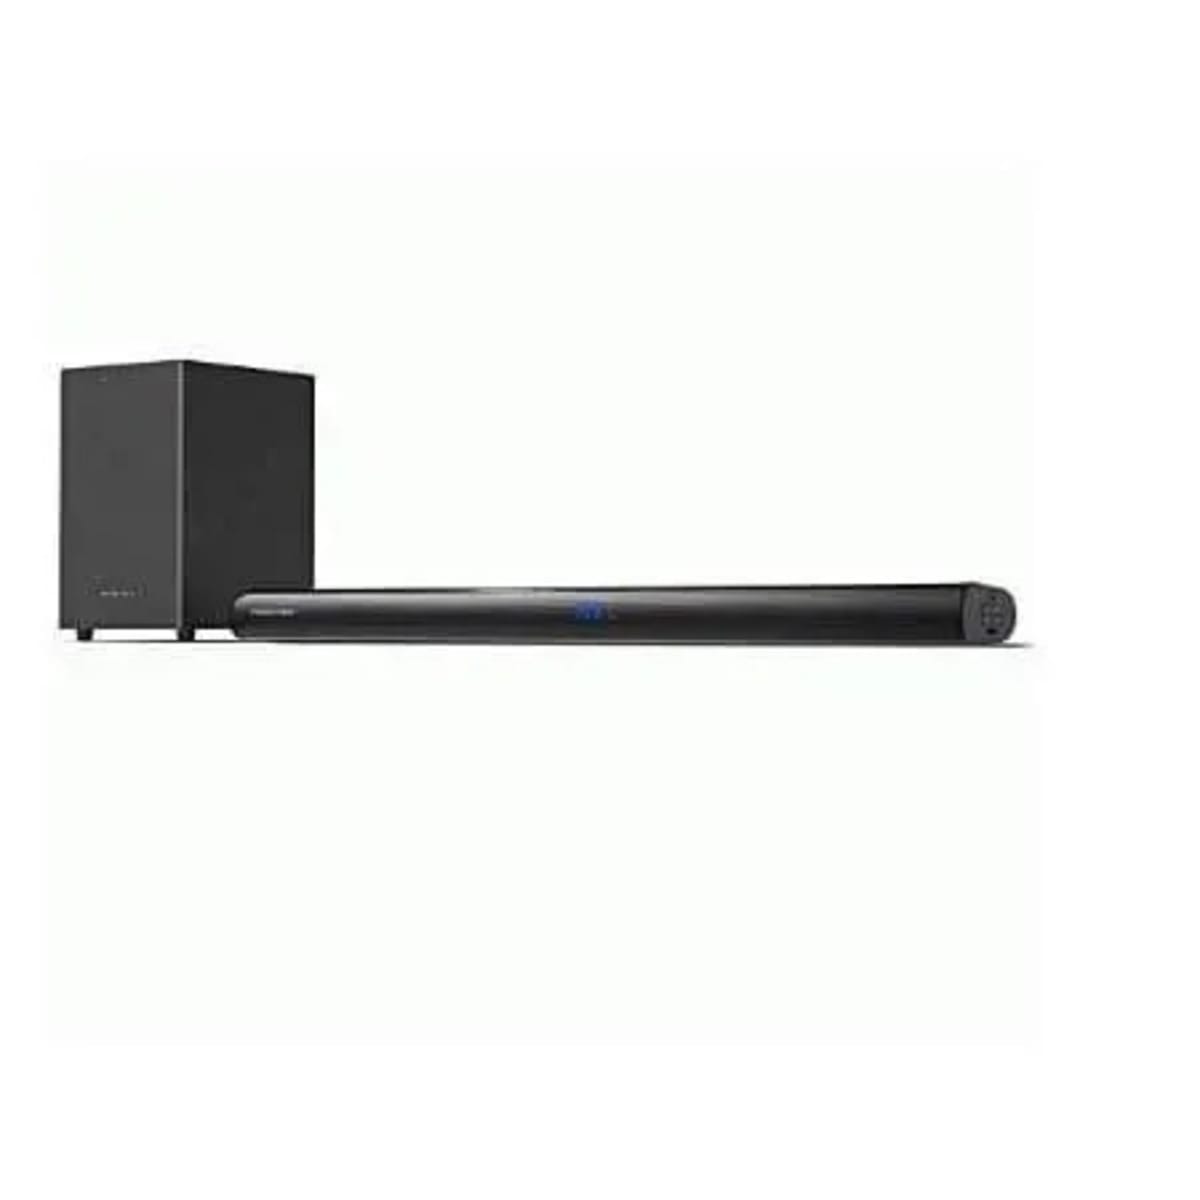 Hs218 Shopping | Sound Speaker - Bar Bluetooth Online Audio Konga - 200w 2.1ch Hisense